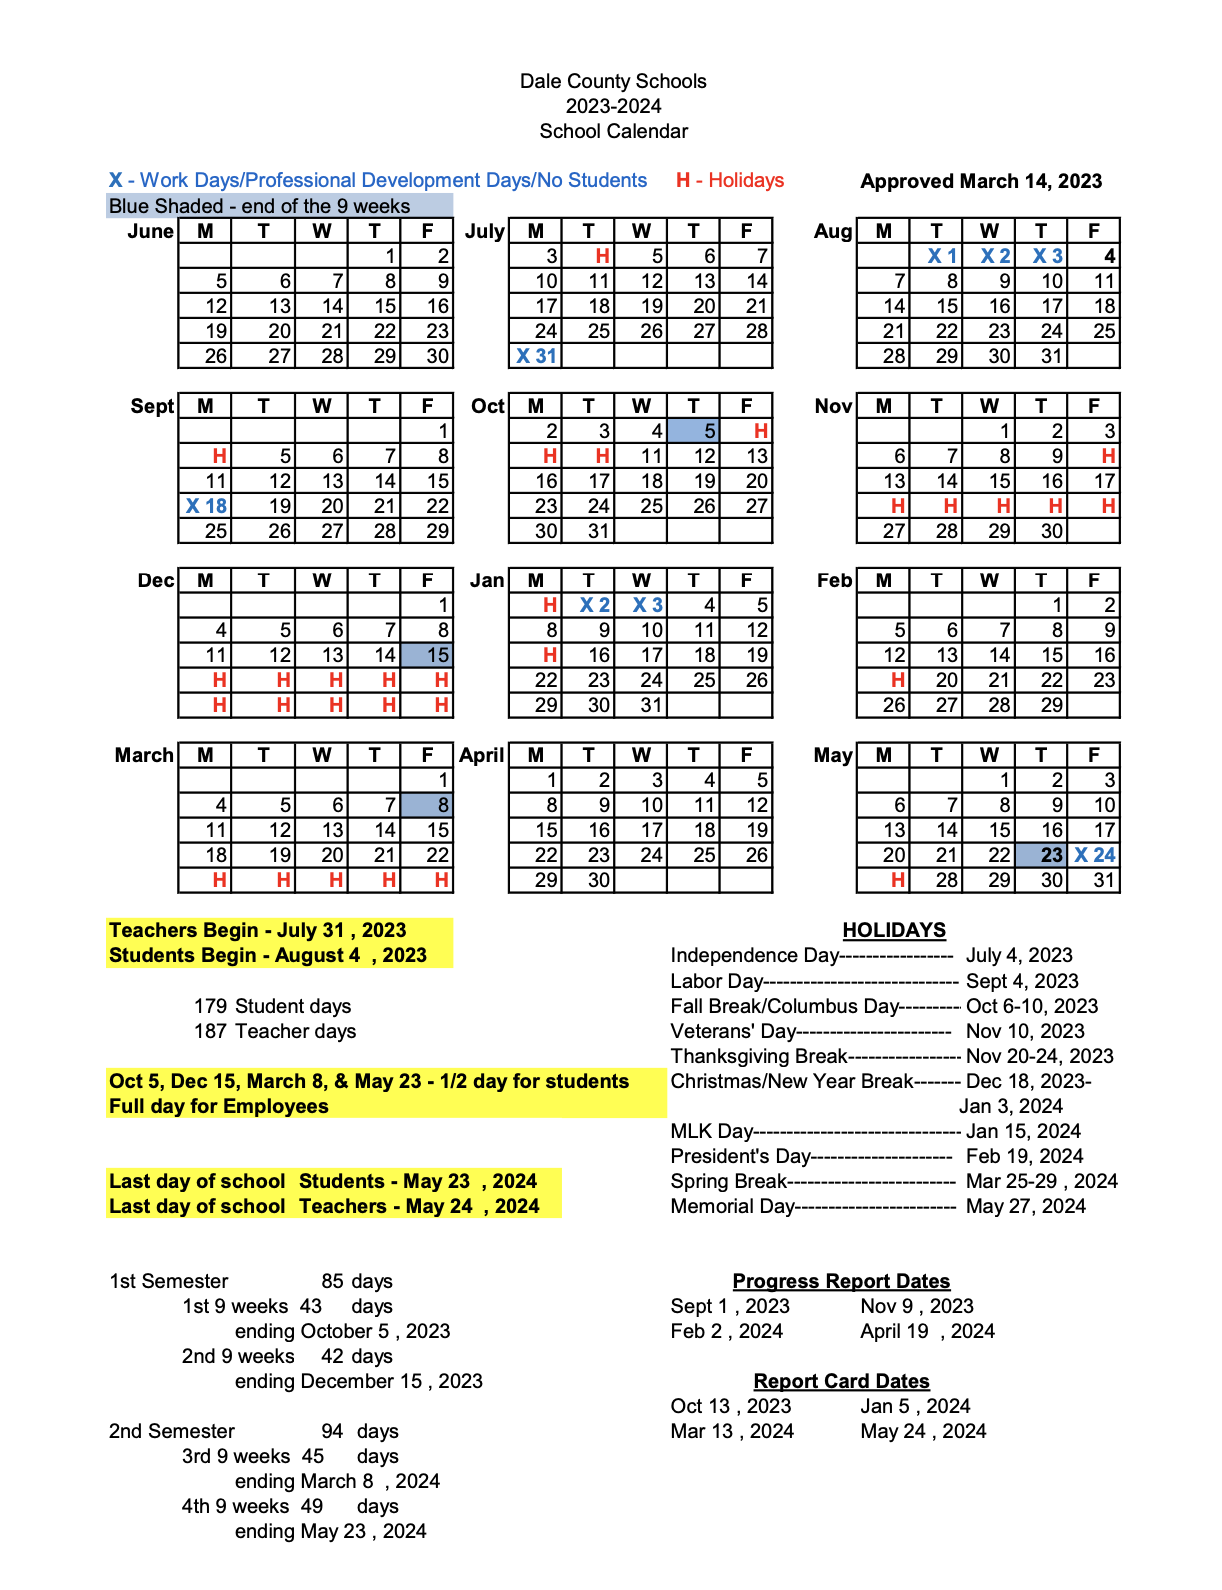 approved school calendar 23-24